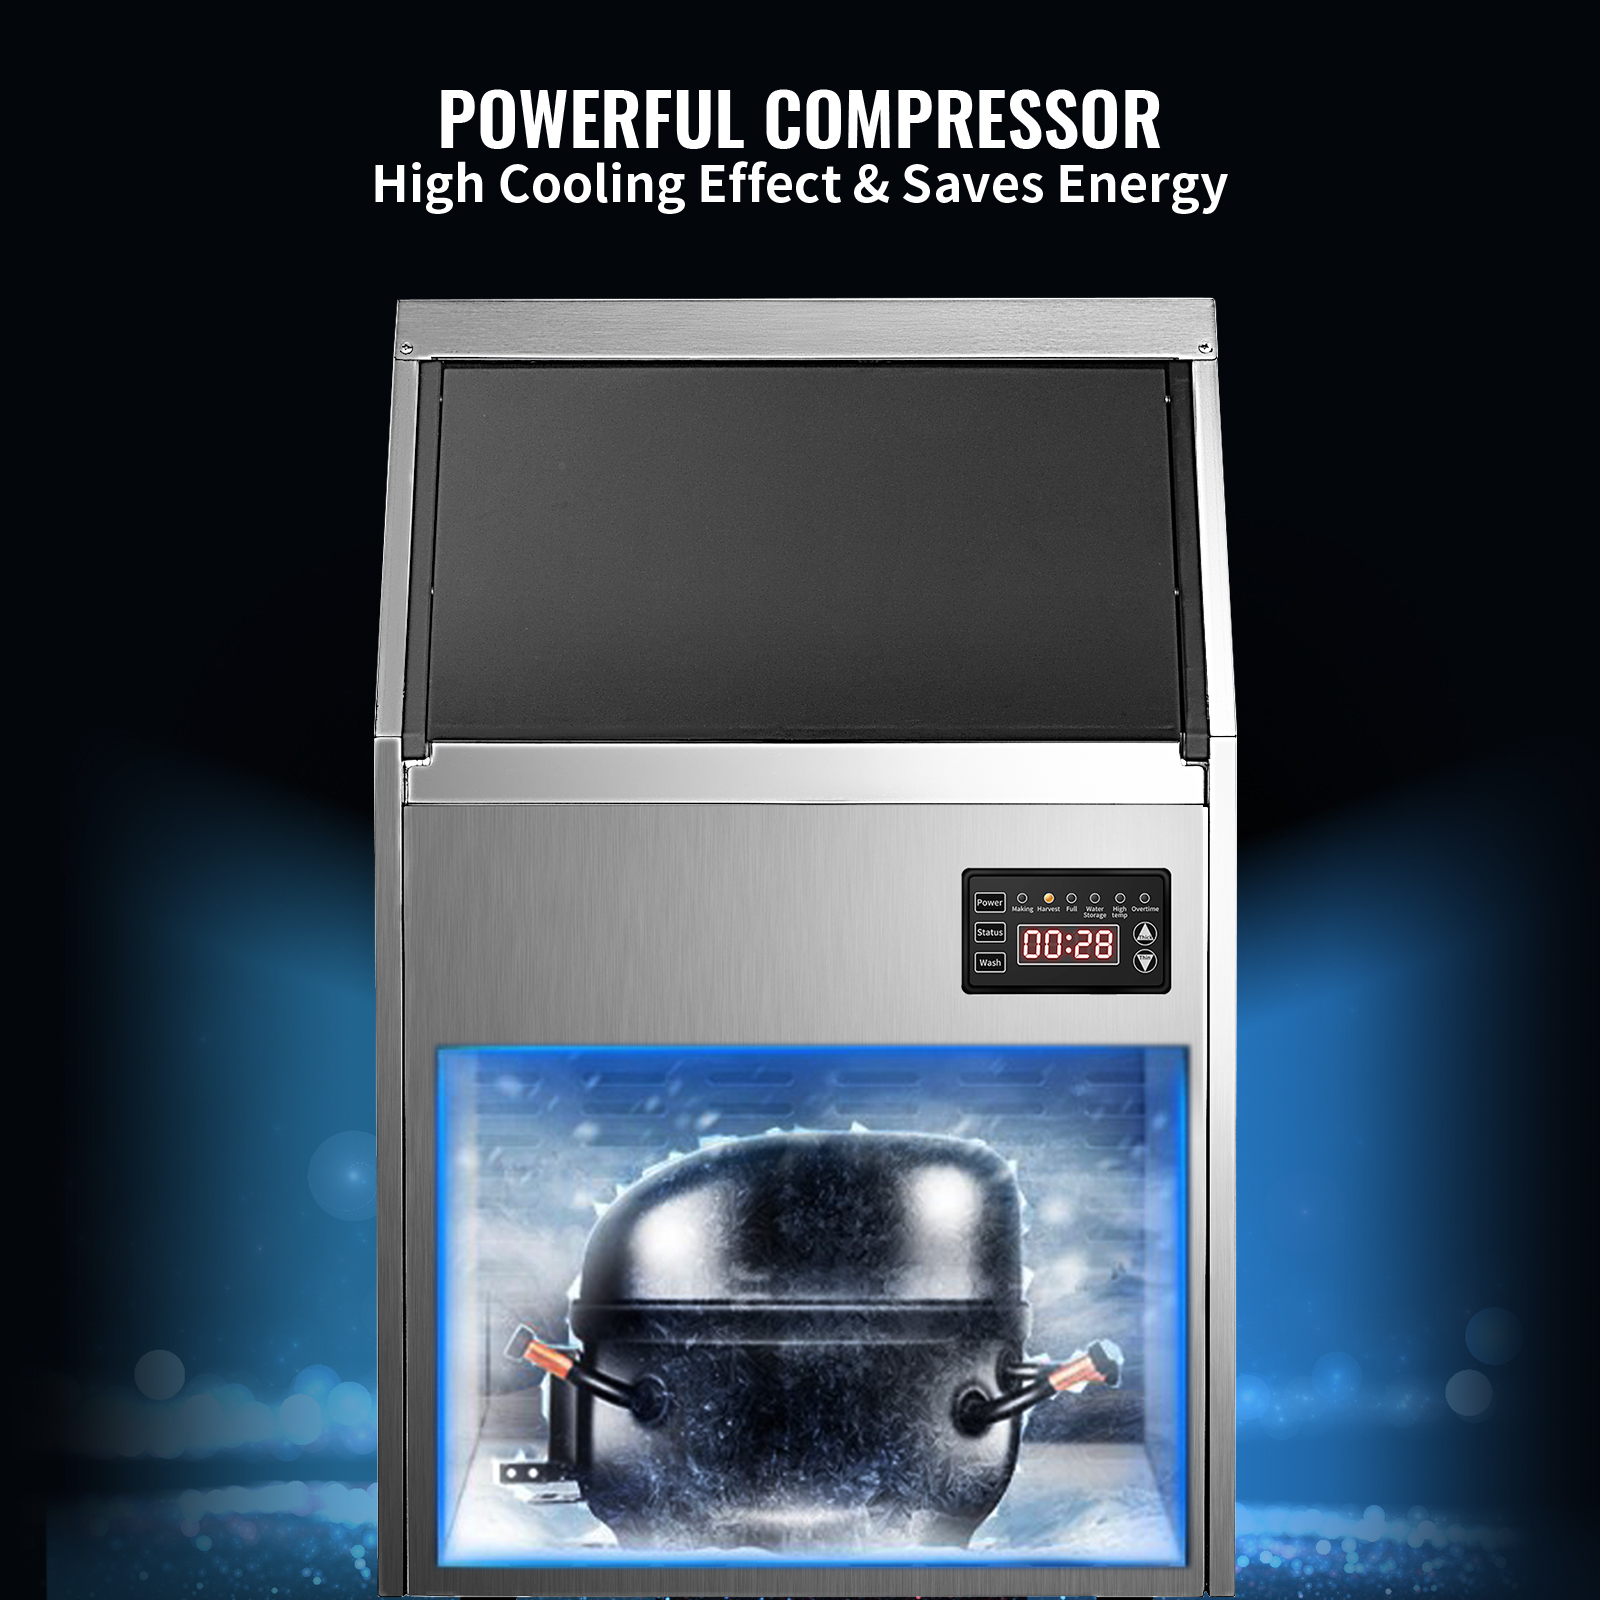 VEVOR Commercial Ice Maker Ice Cube Machine Stainless Steel Restaurant 45-60kg US